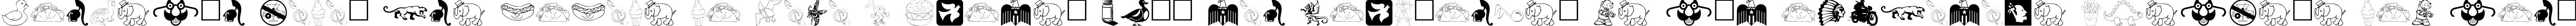 Пример написания шрифтом Animations текста на испанском